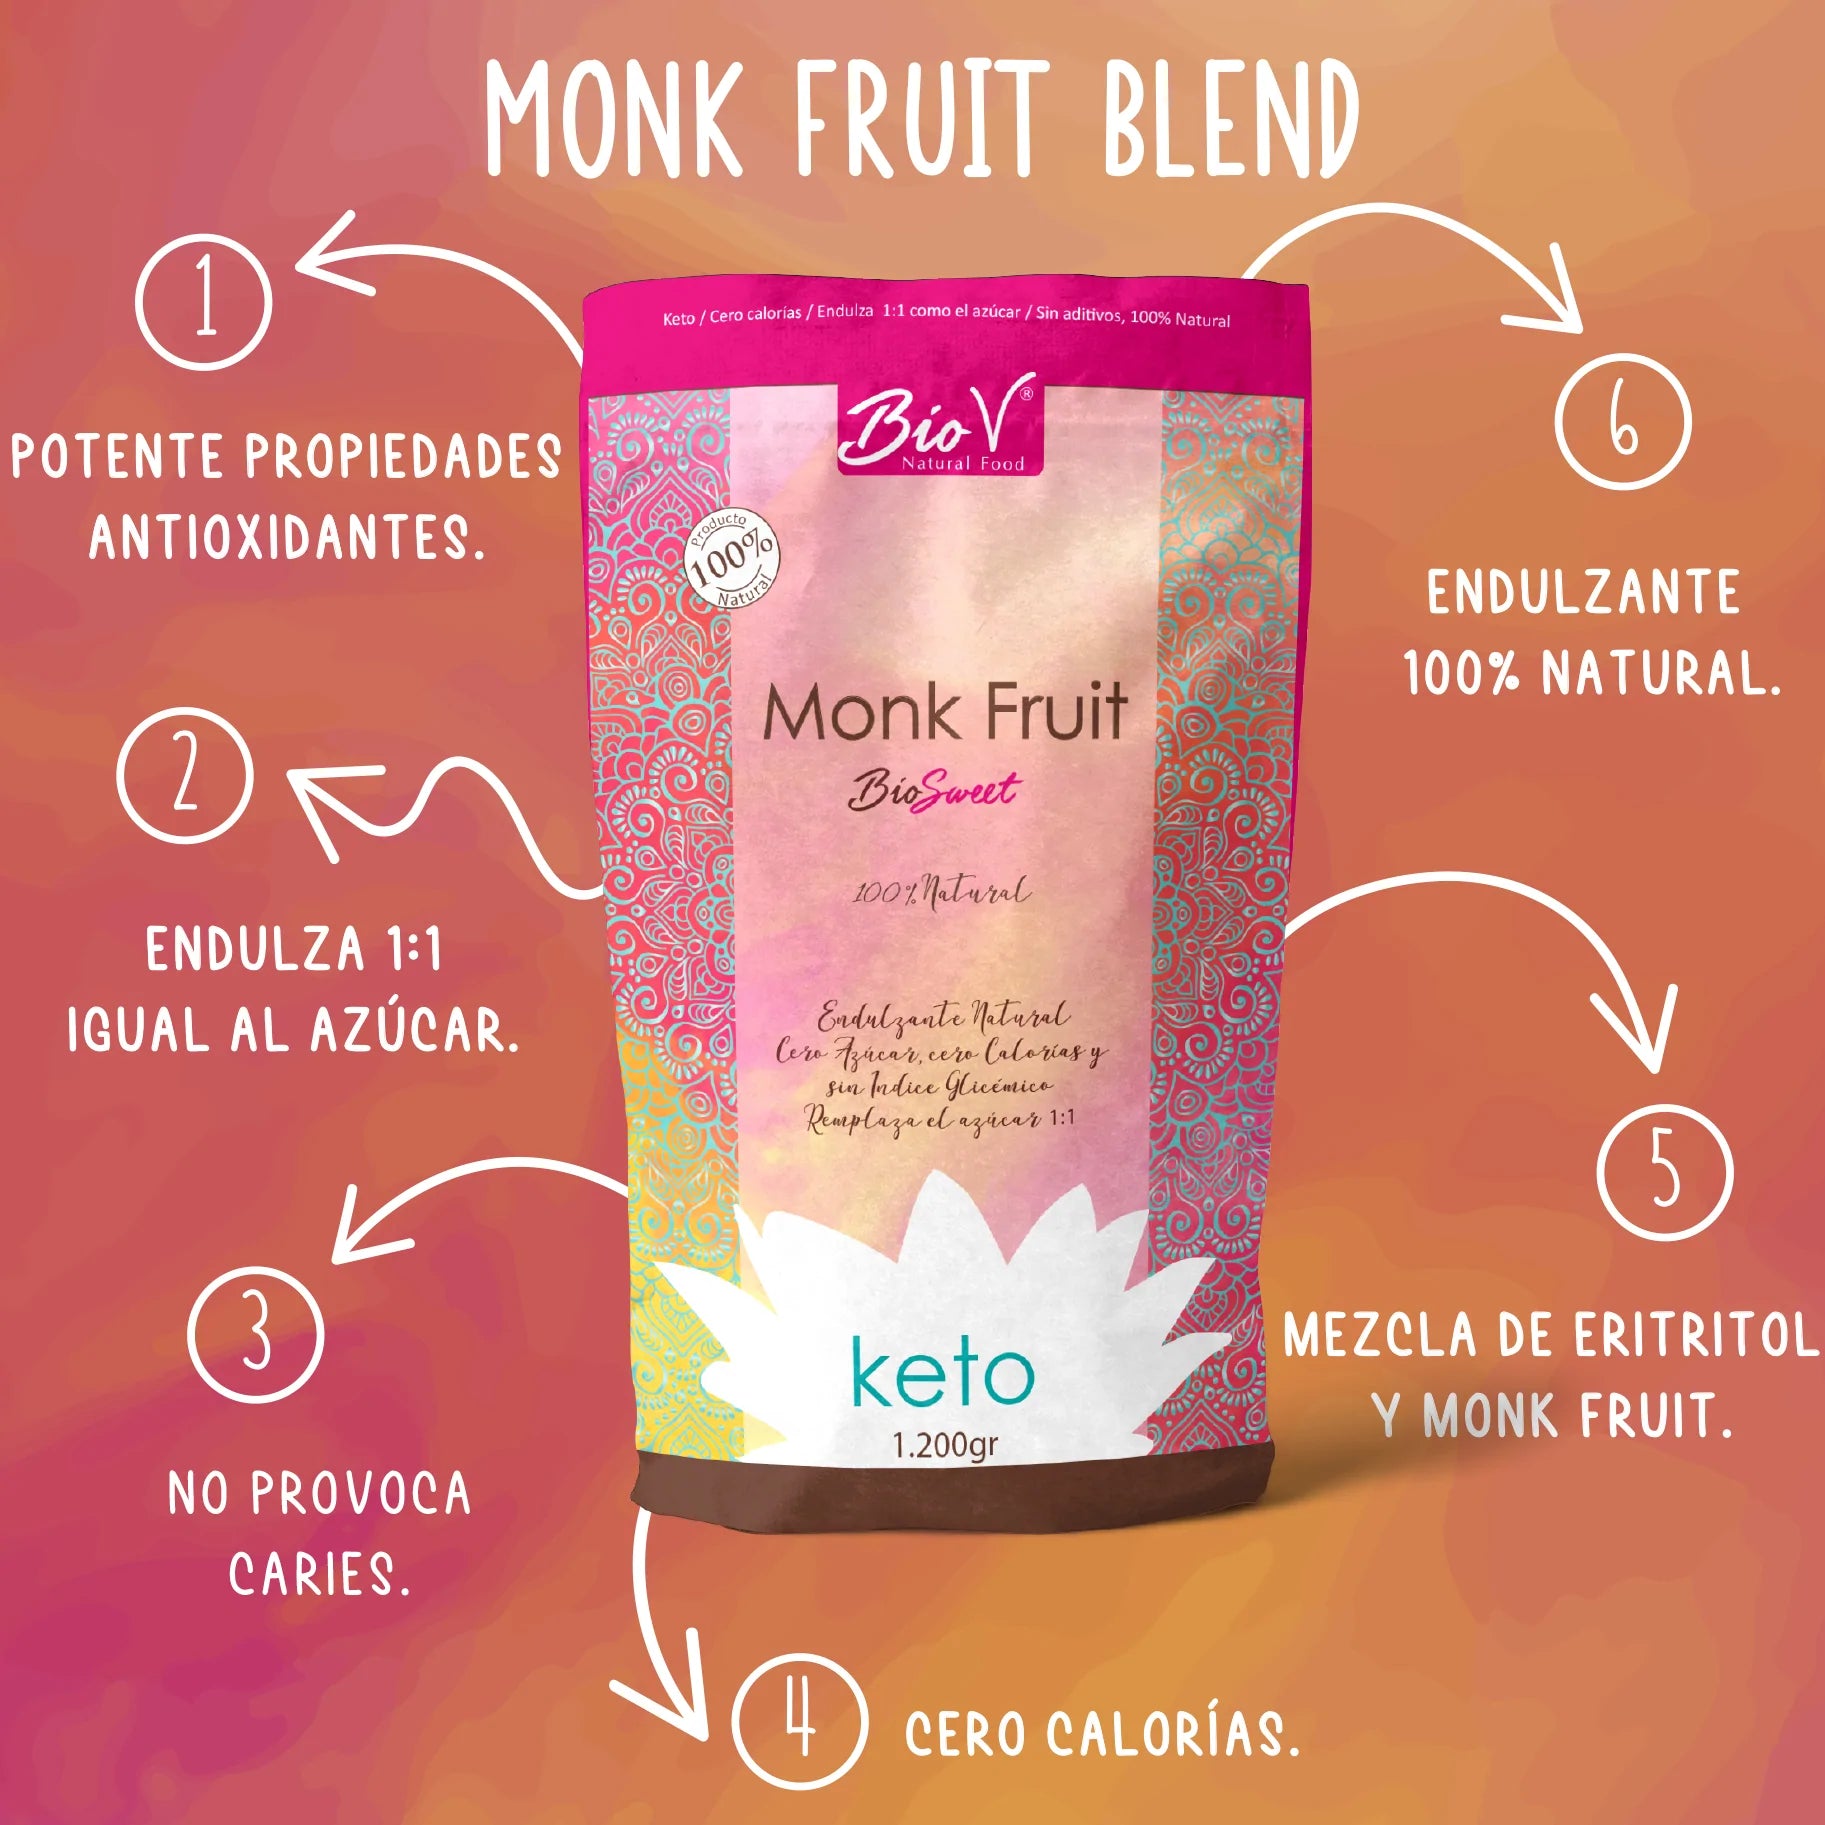 Monk Fruit Blend (Fruto del Monje + Eritritol), 300 grs. BioV